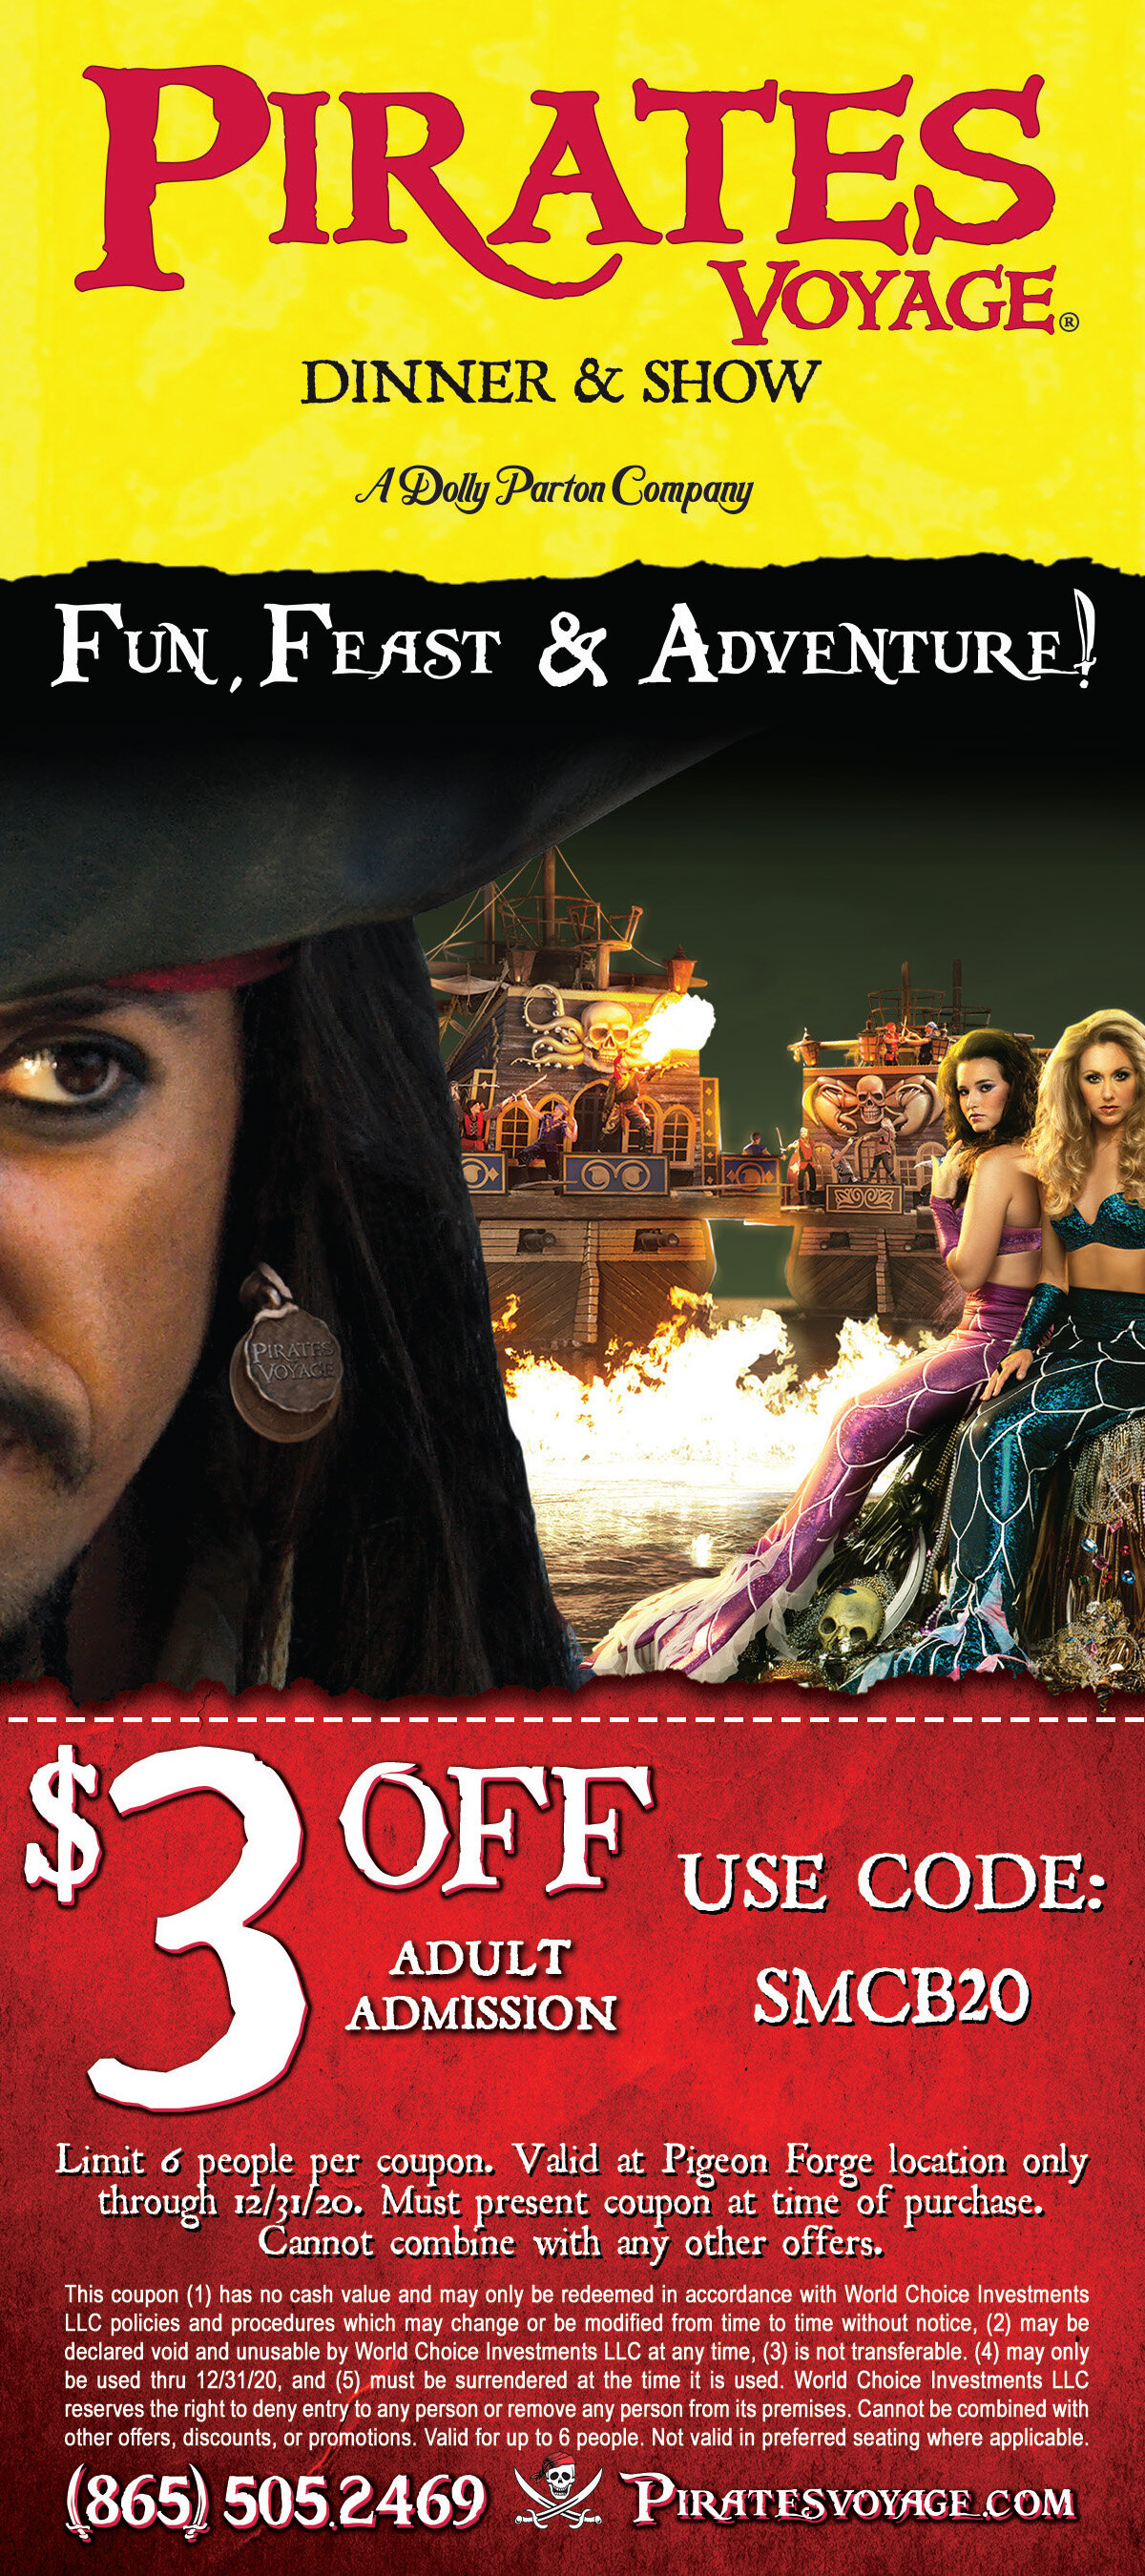 pirates voyage aarp discount